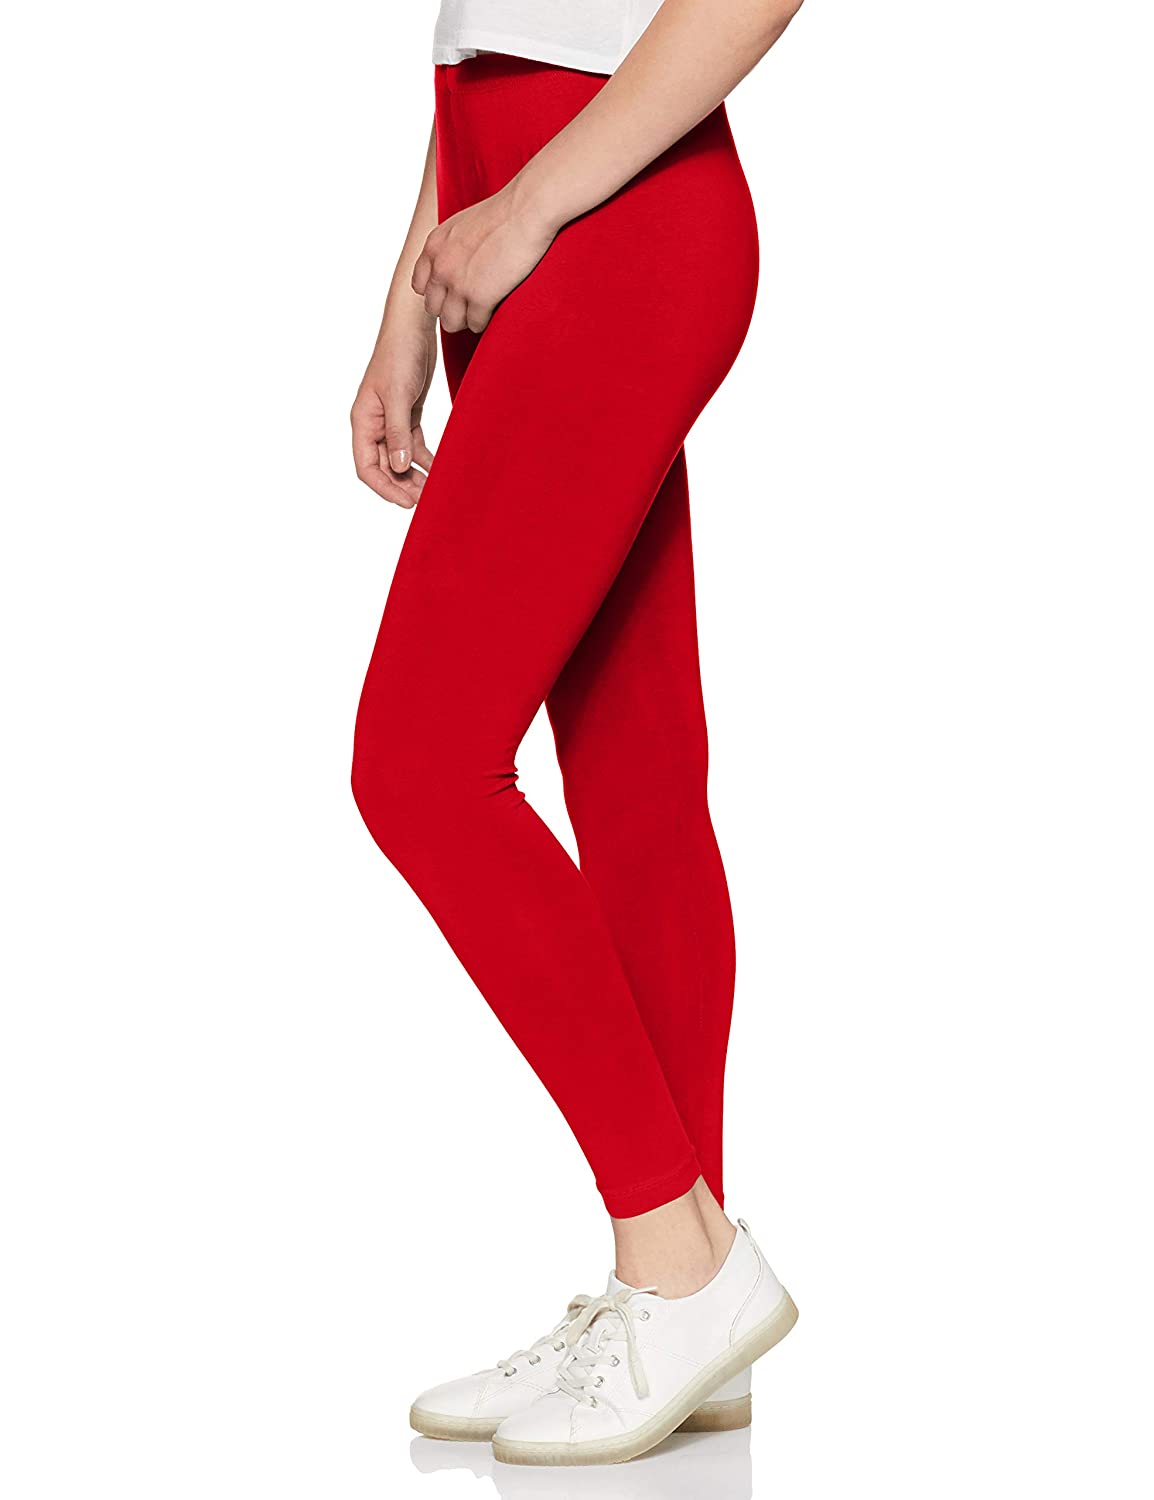 Red Cotton Leggings for Woman - Stilento